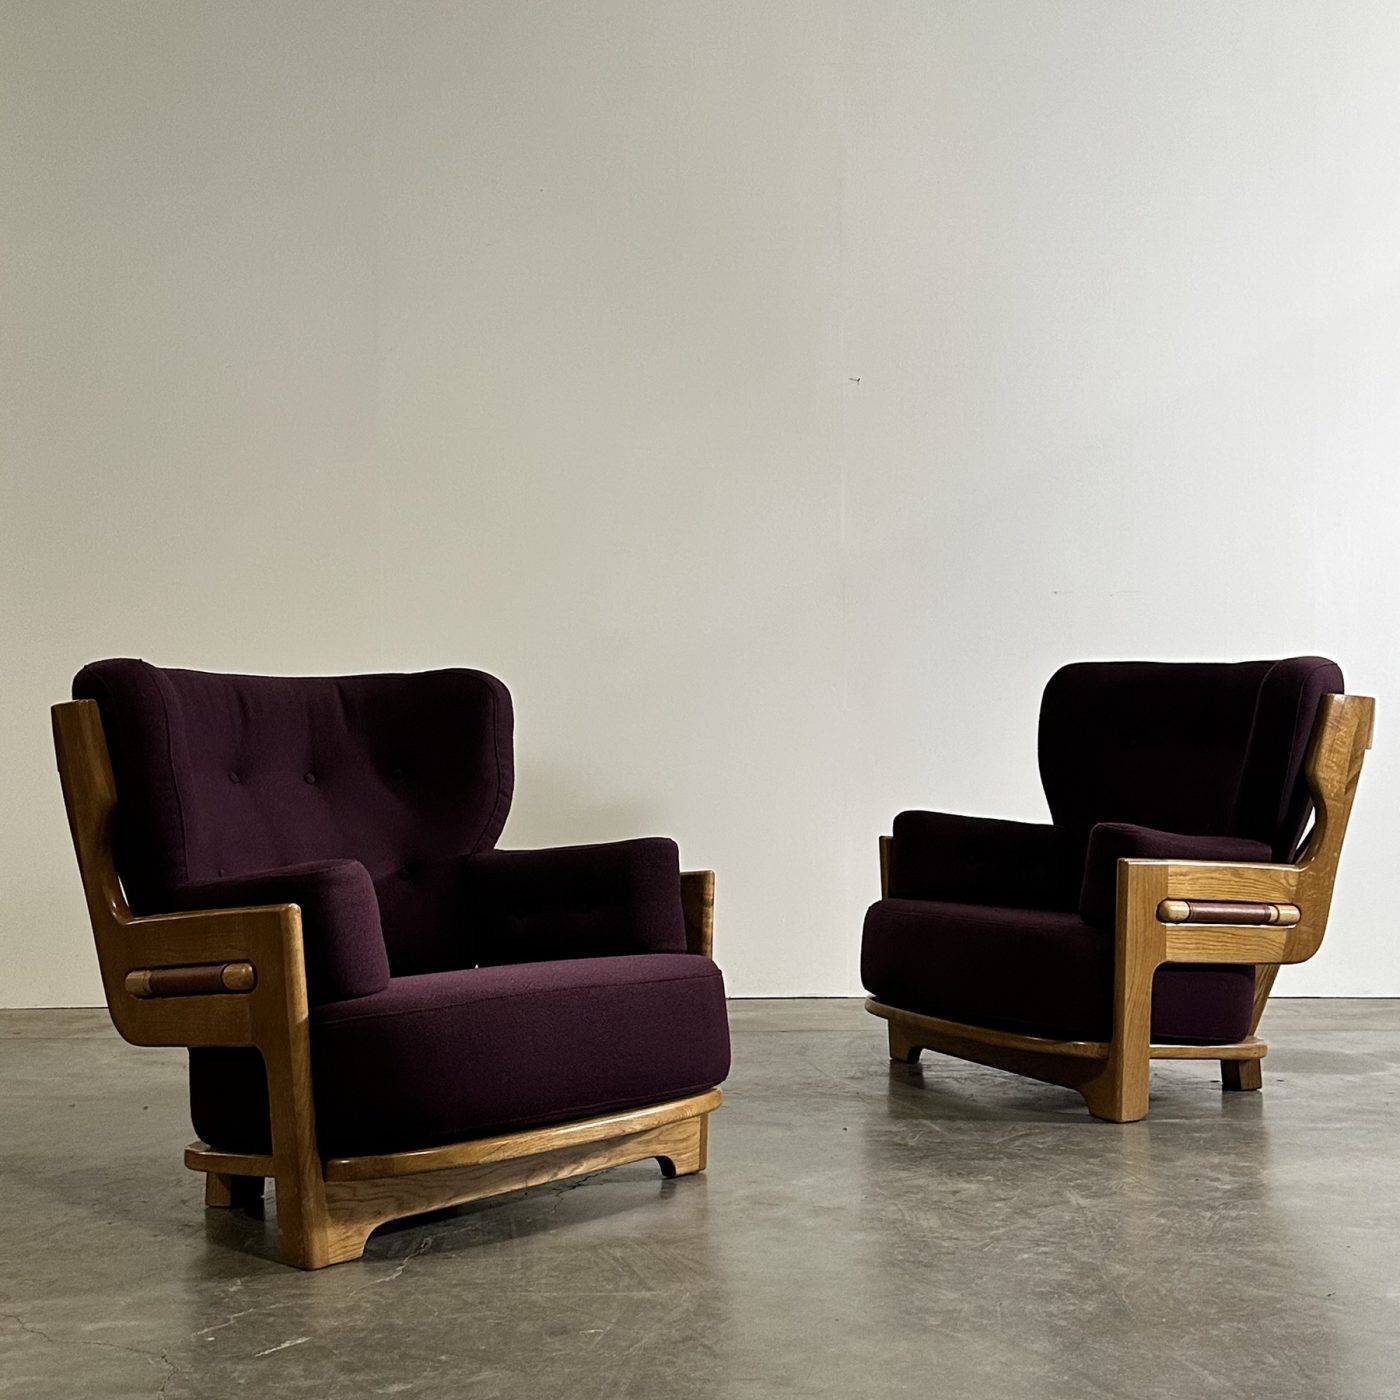 objet-vagabond-denis-armchairs0004